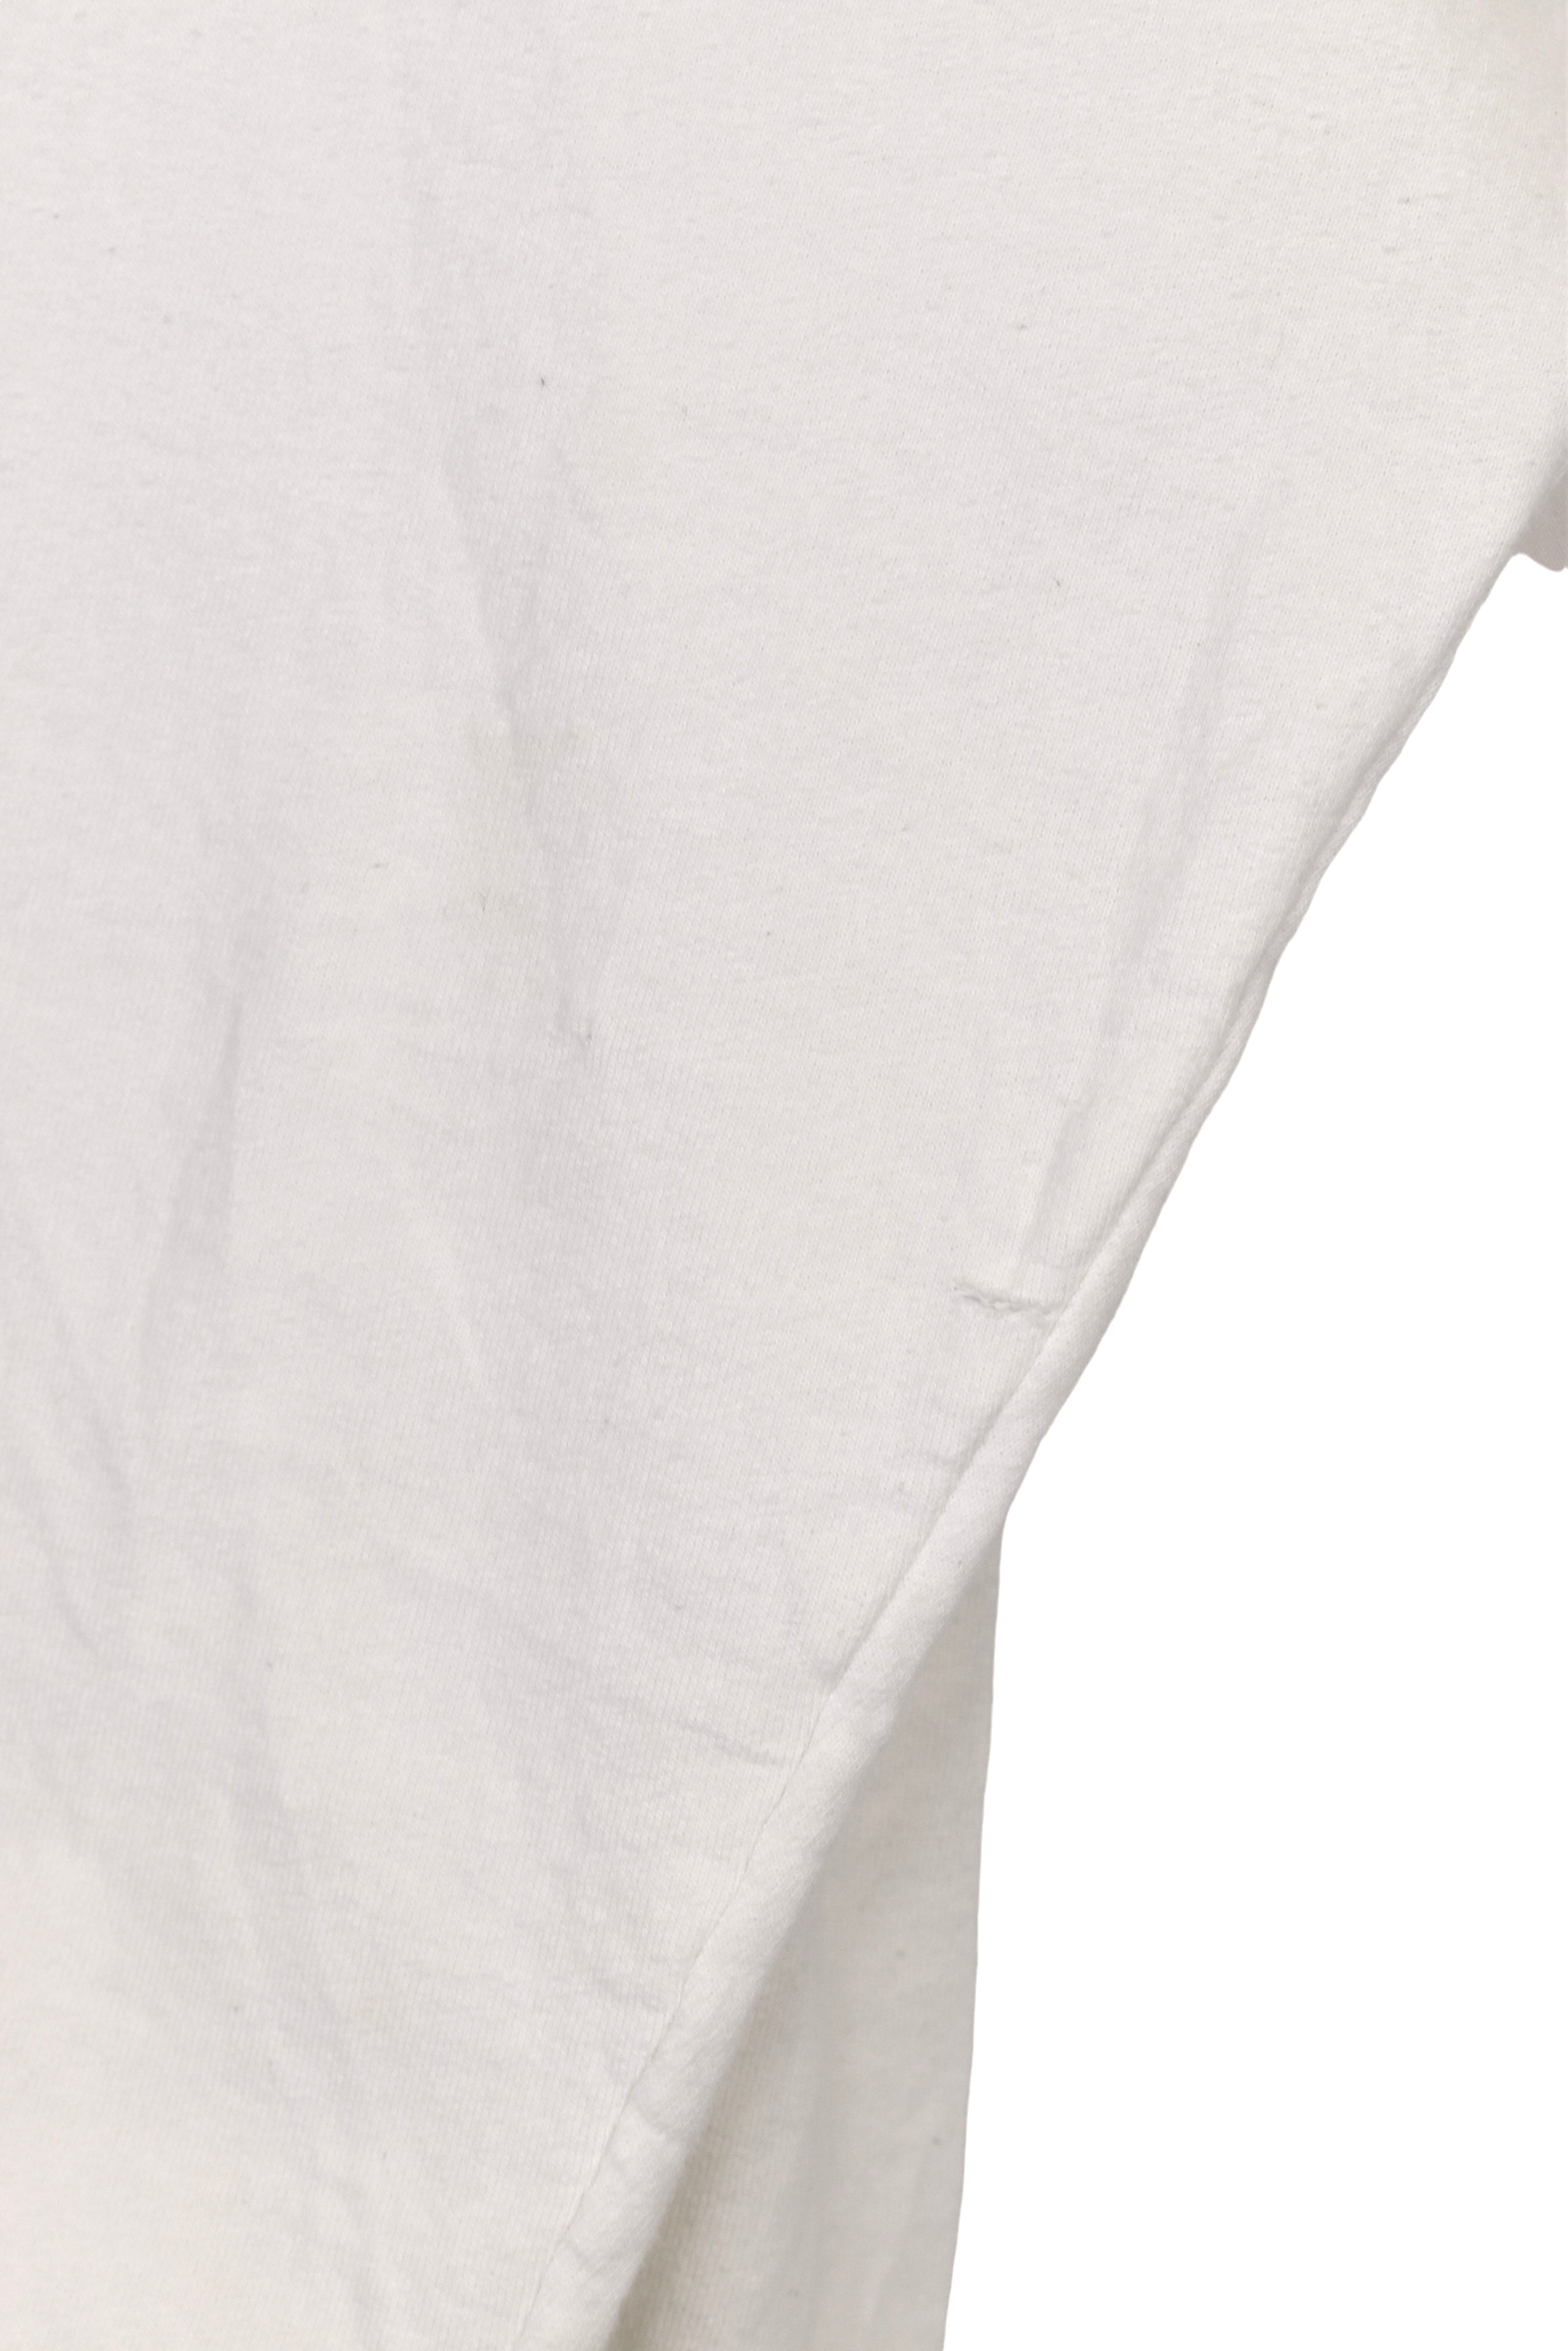 Modern Champion sweatshirt (L), white embroidered crewneck